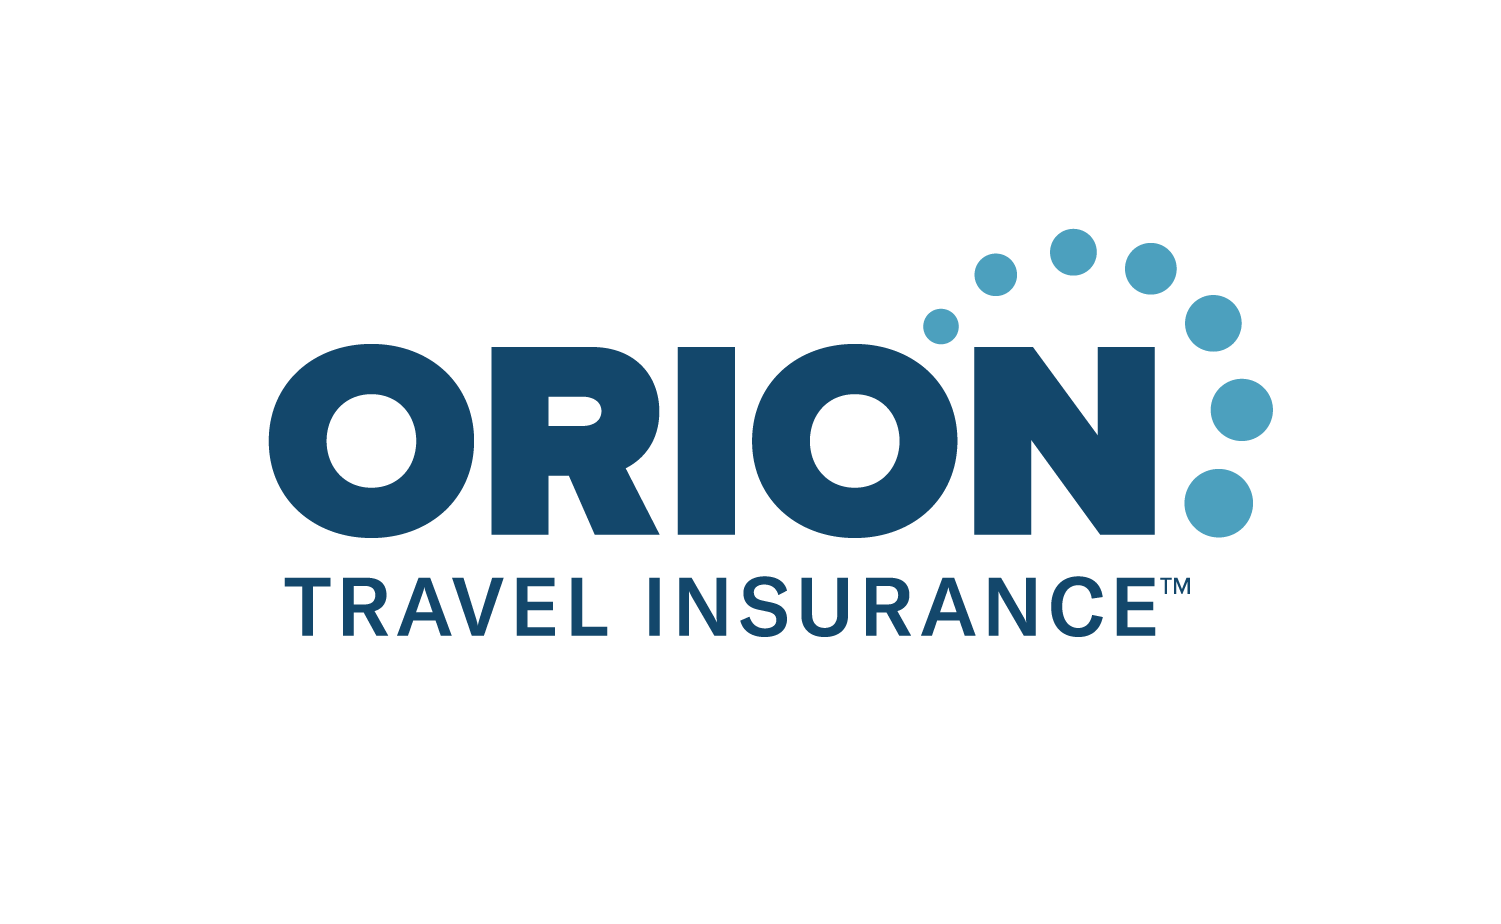 Orion Travel Insurance company logo